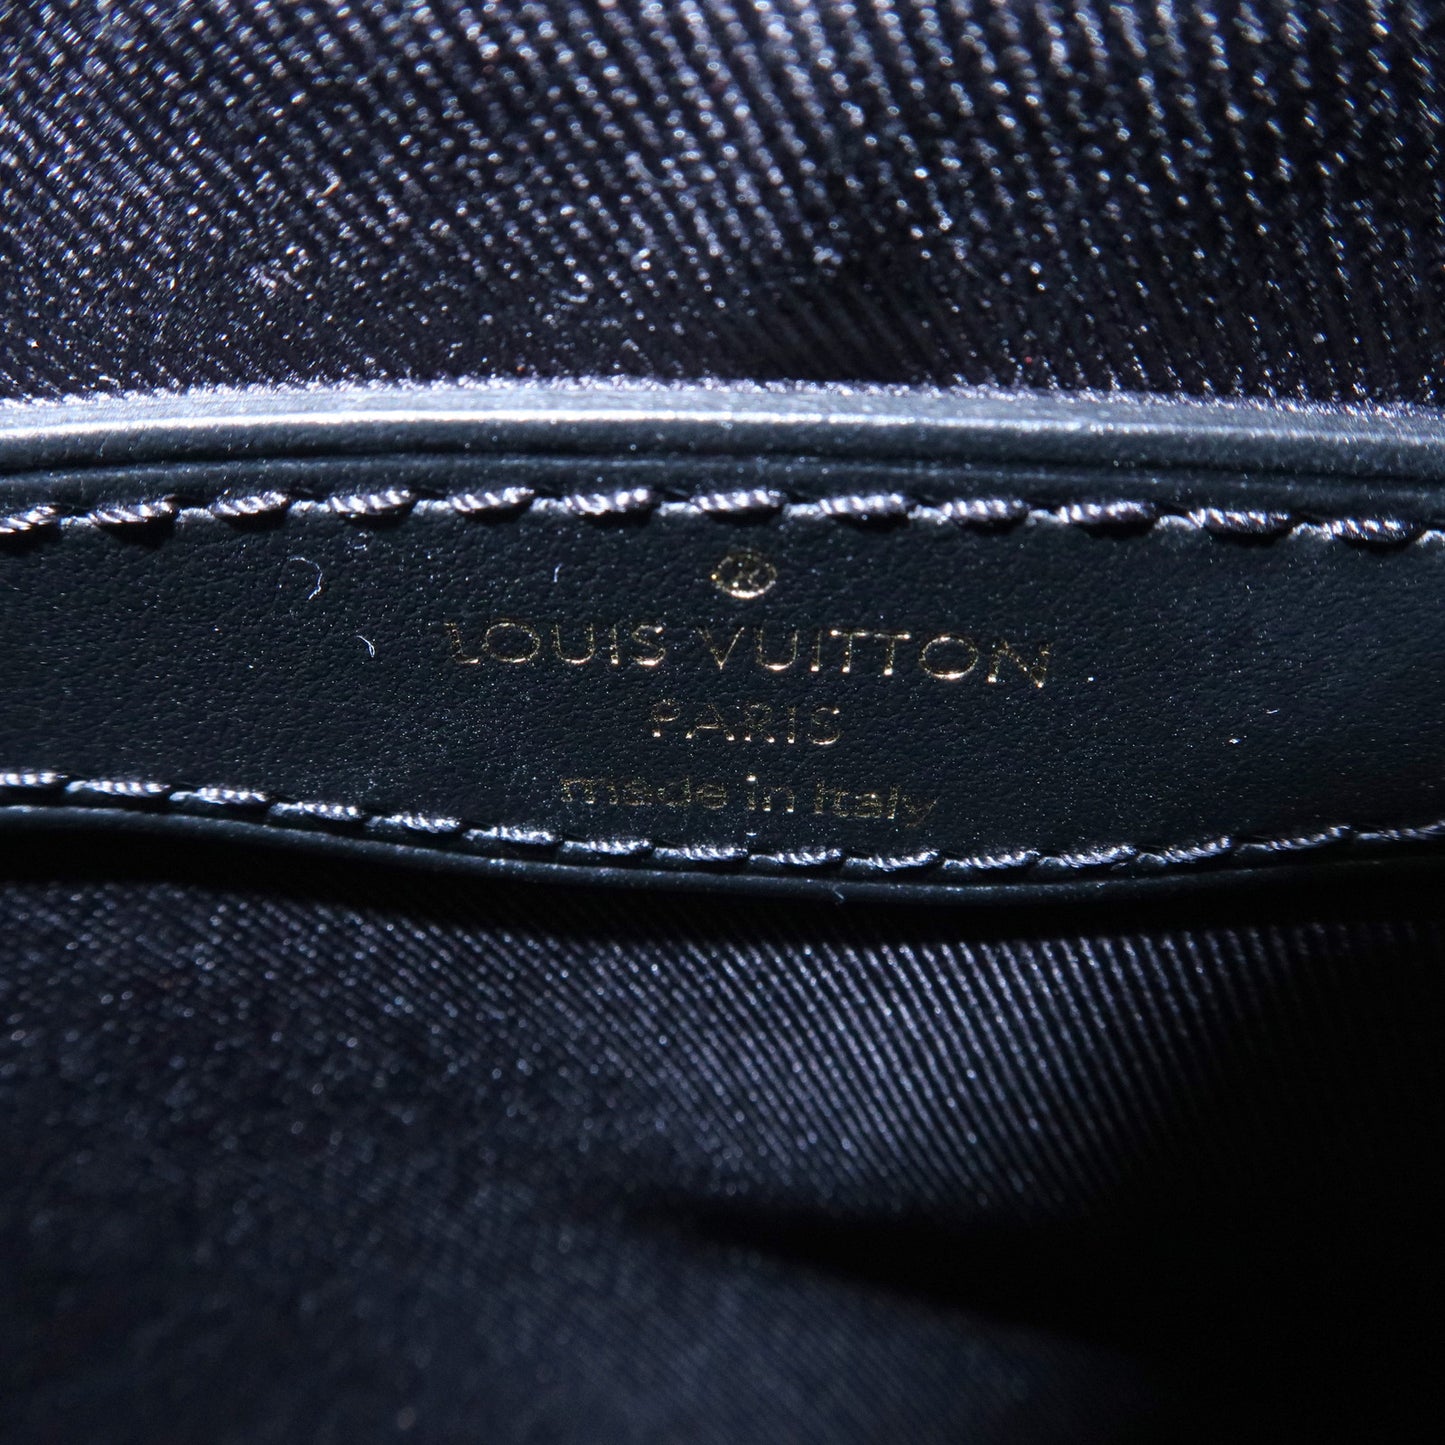 Louis Vuitton Monogram 2WAY Bag Boulogne NM M45831